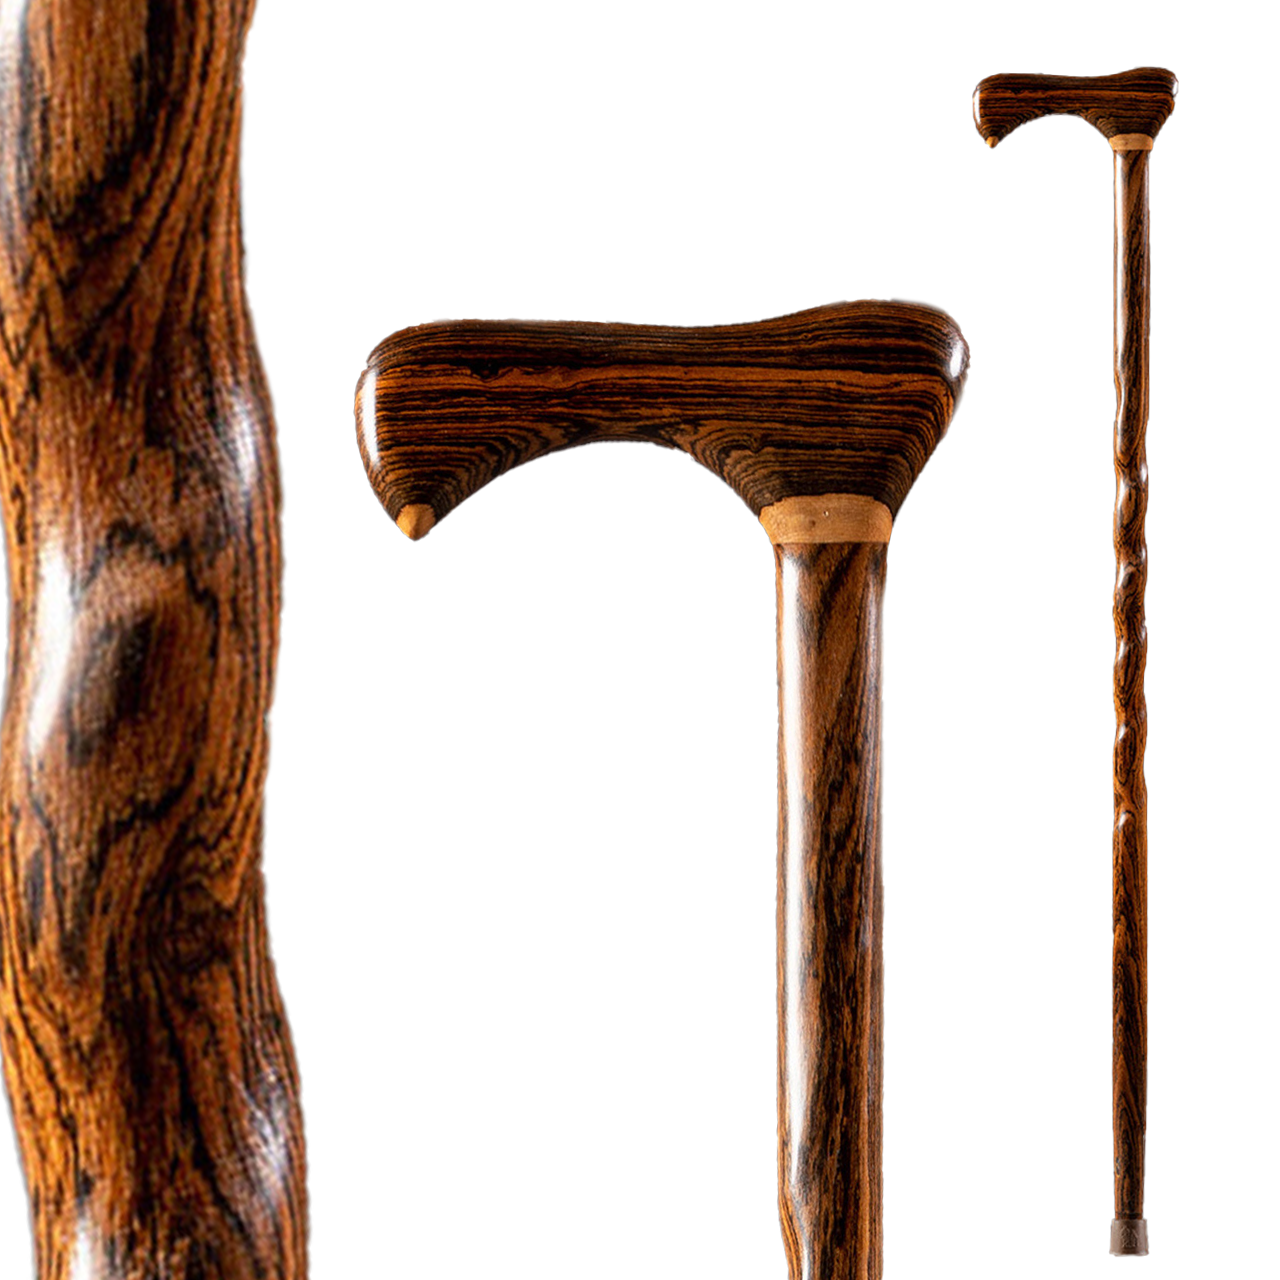 Wooden Walking Sticks, Wooden Canes, Wood Walking Sticks, Cane